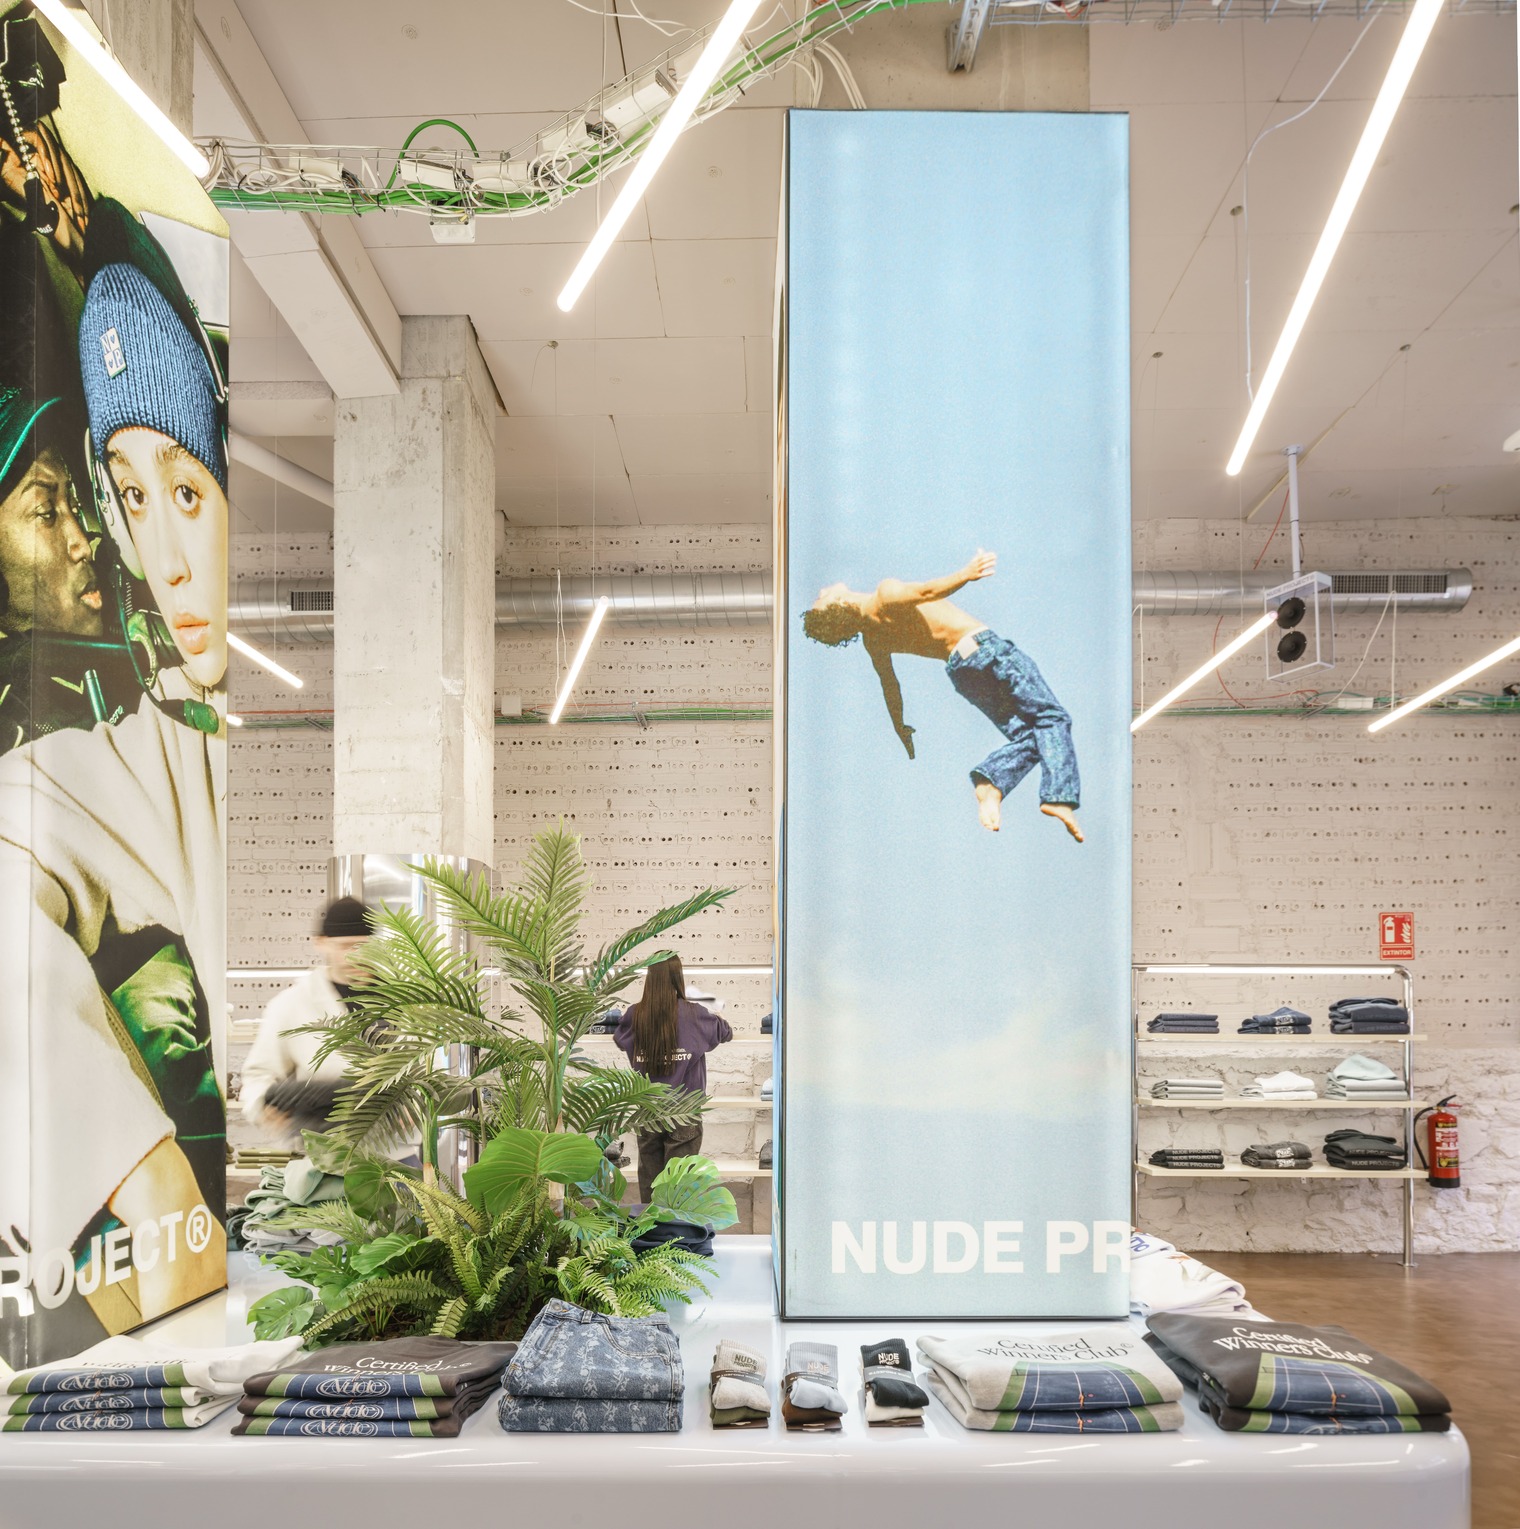 Archisearch Nude Project's new store in Bilbao | by El Departamento studio